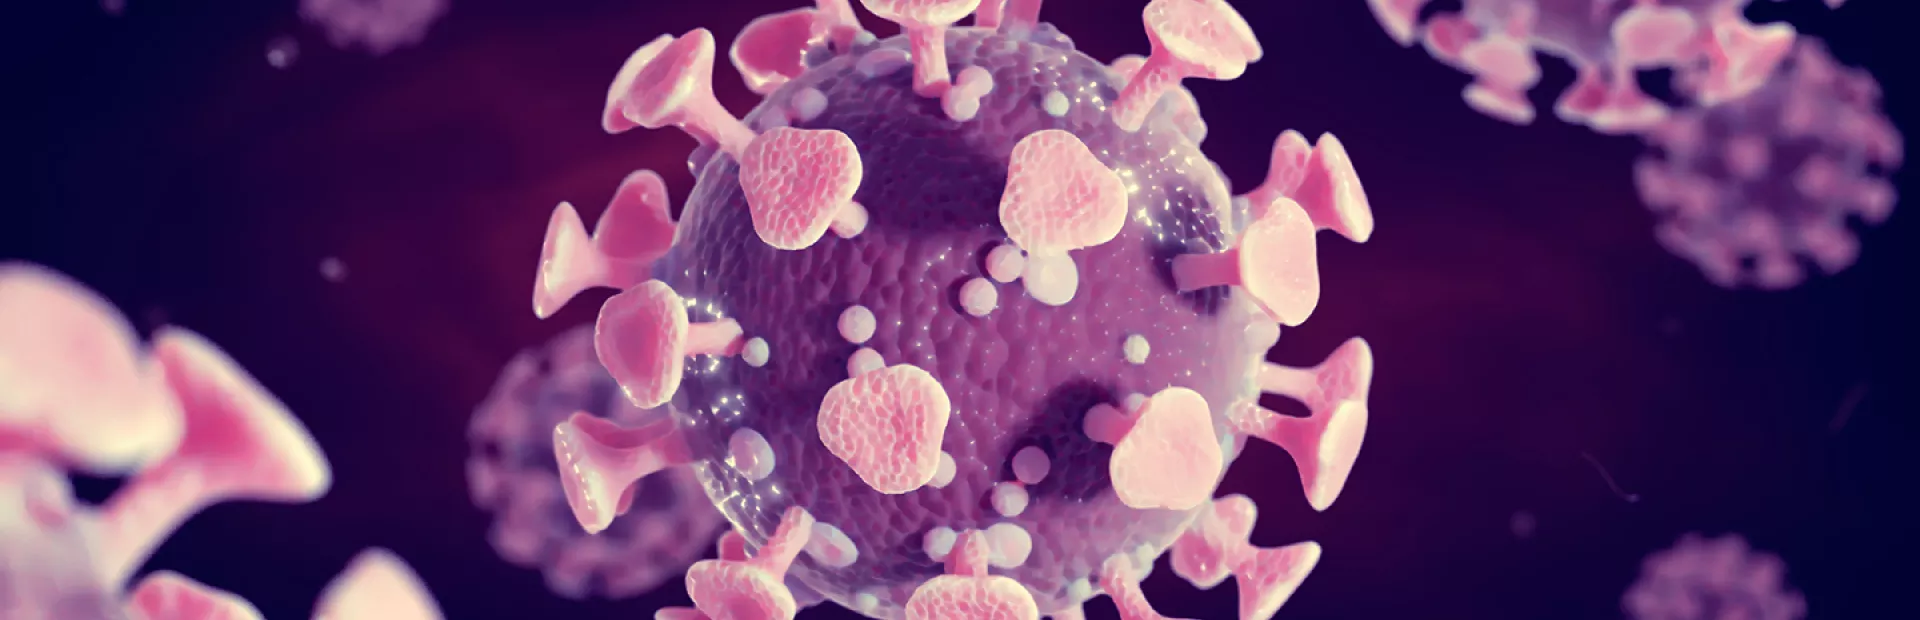 3D rendering of COVID-19, the novel coronavirus causing the pandemic